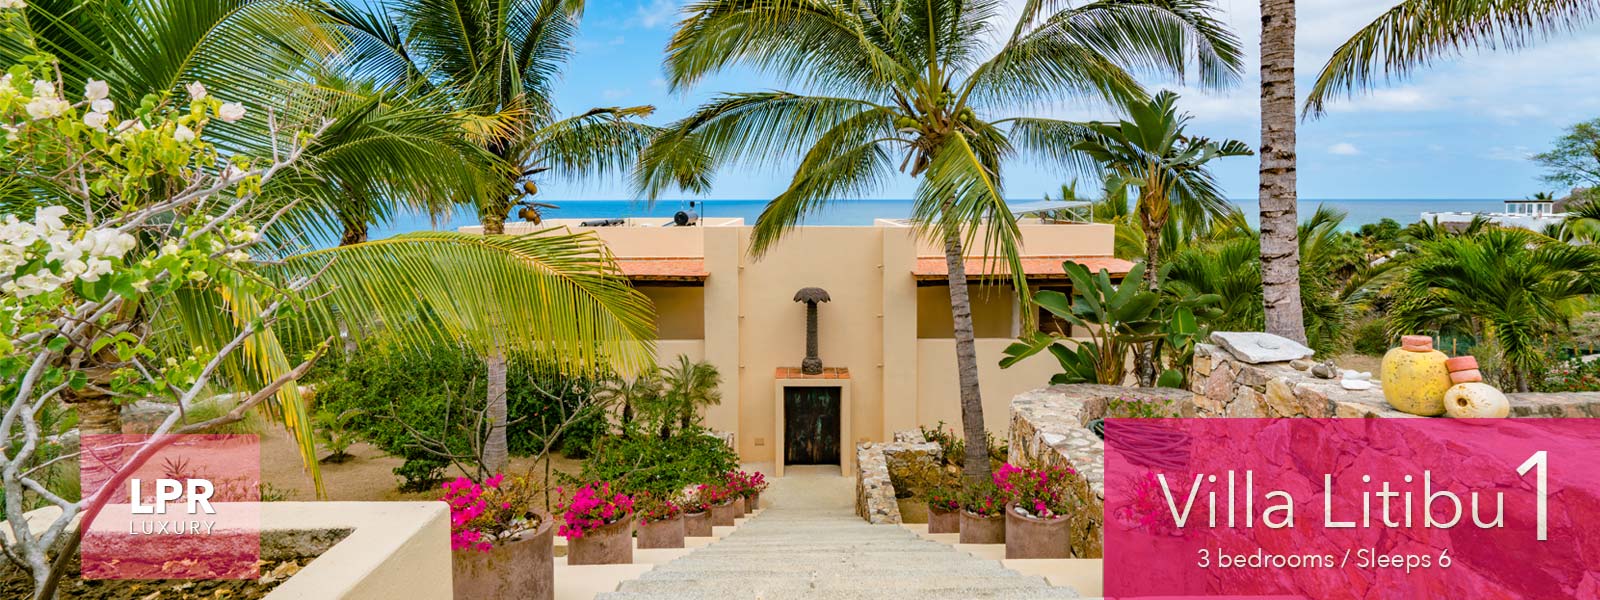 Villa Litibu 1 - Beachfront home along the RIviera Nayarit, Mexico